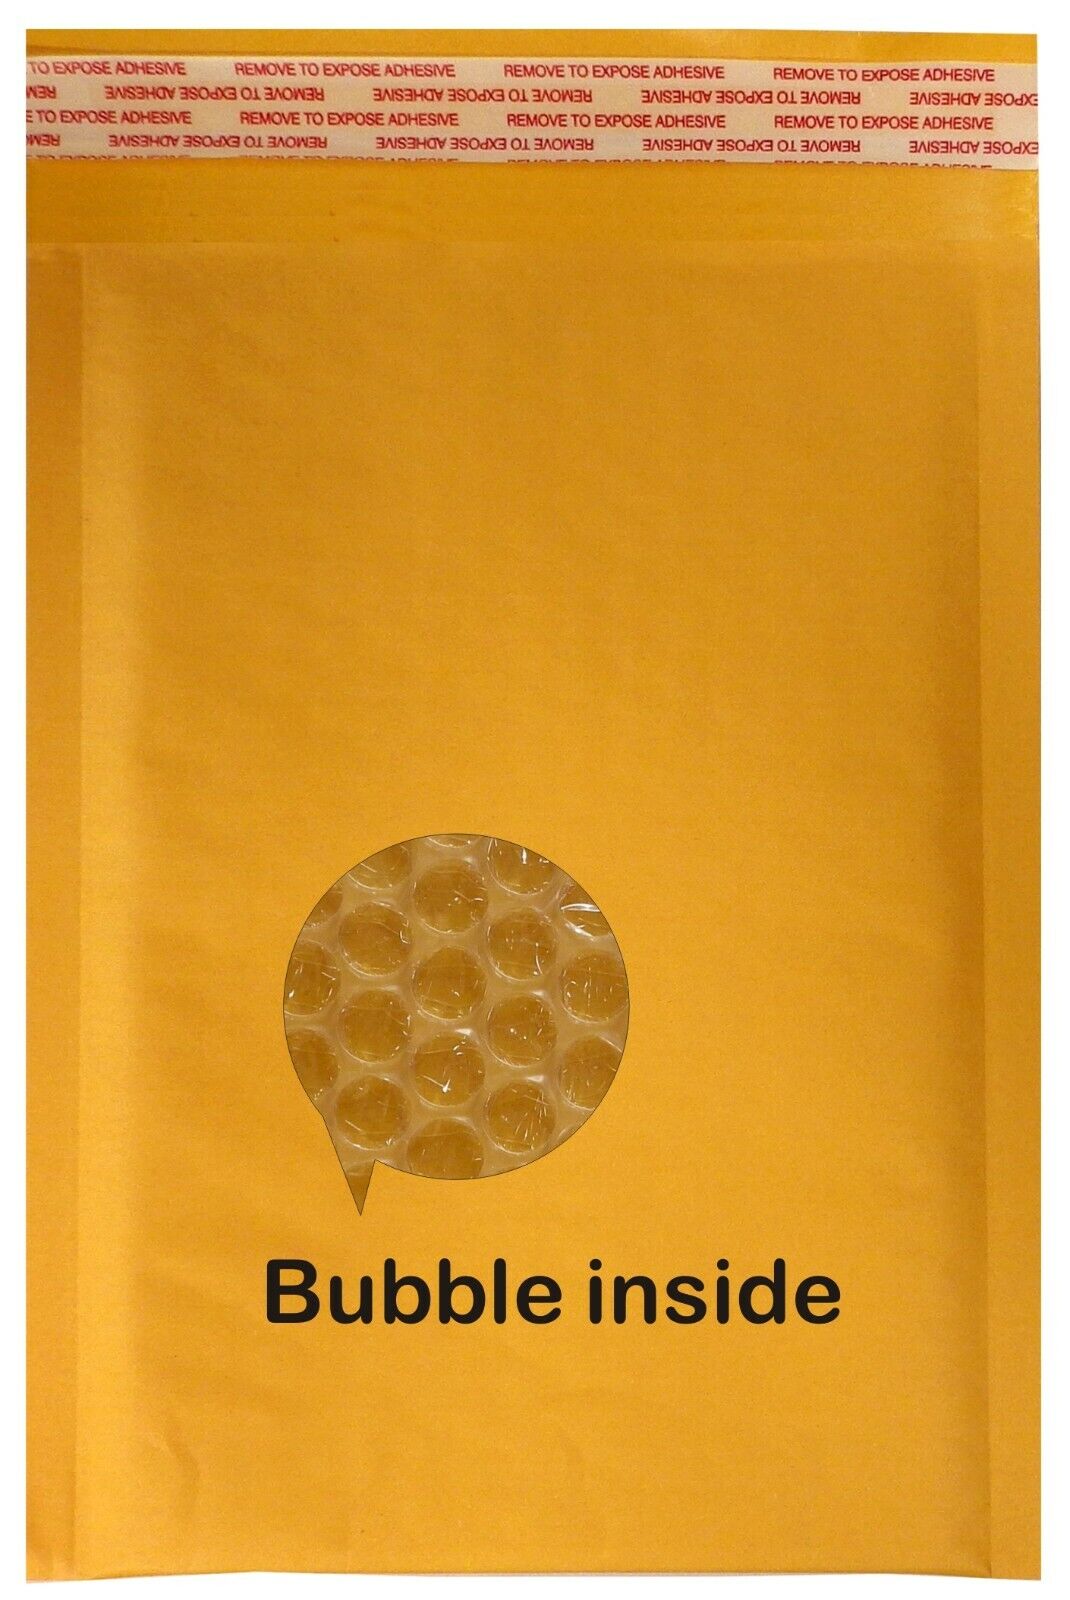 Polycyberusa ® 5000 #000 Kraft Bubble Padded Envelopes Mailers 4 X 7